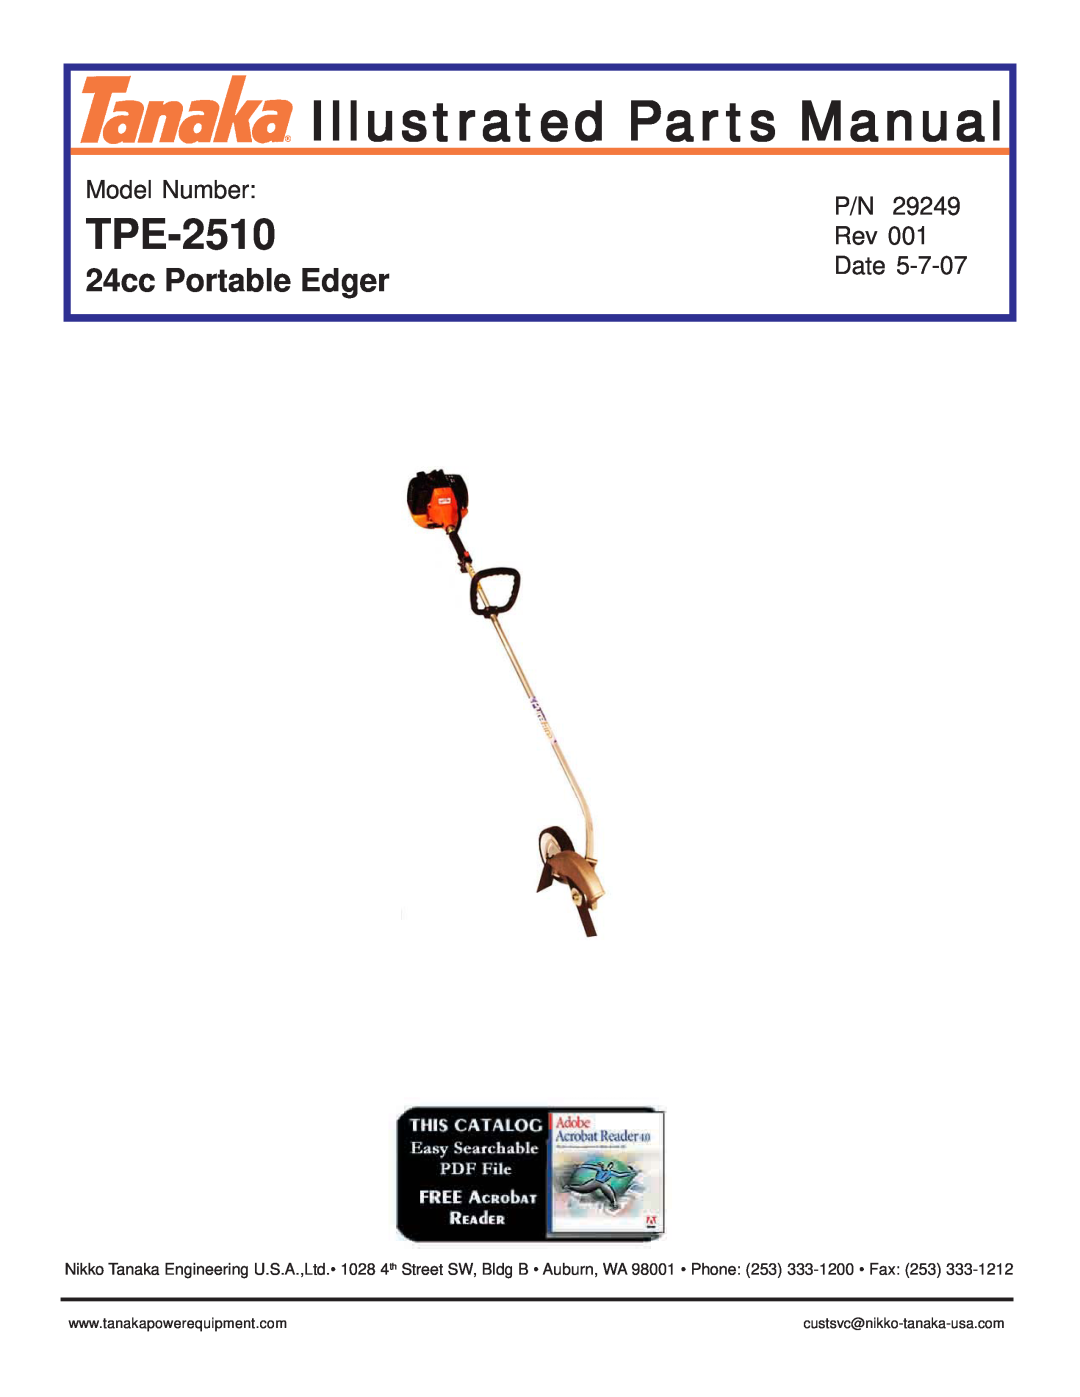 Tanaka TPE-25OPF manual Pole Edgers, Owner’s Manual, TPE-2501,TPE-2510, TPE-250PF,TPE-270PF/PN, Model Numbers, Date 